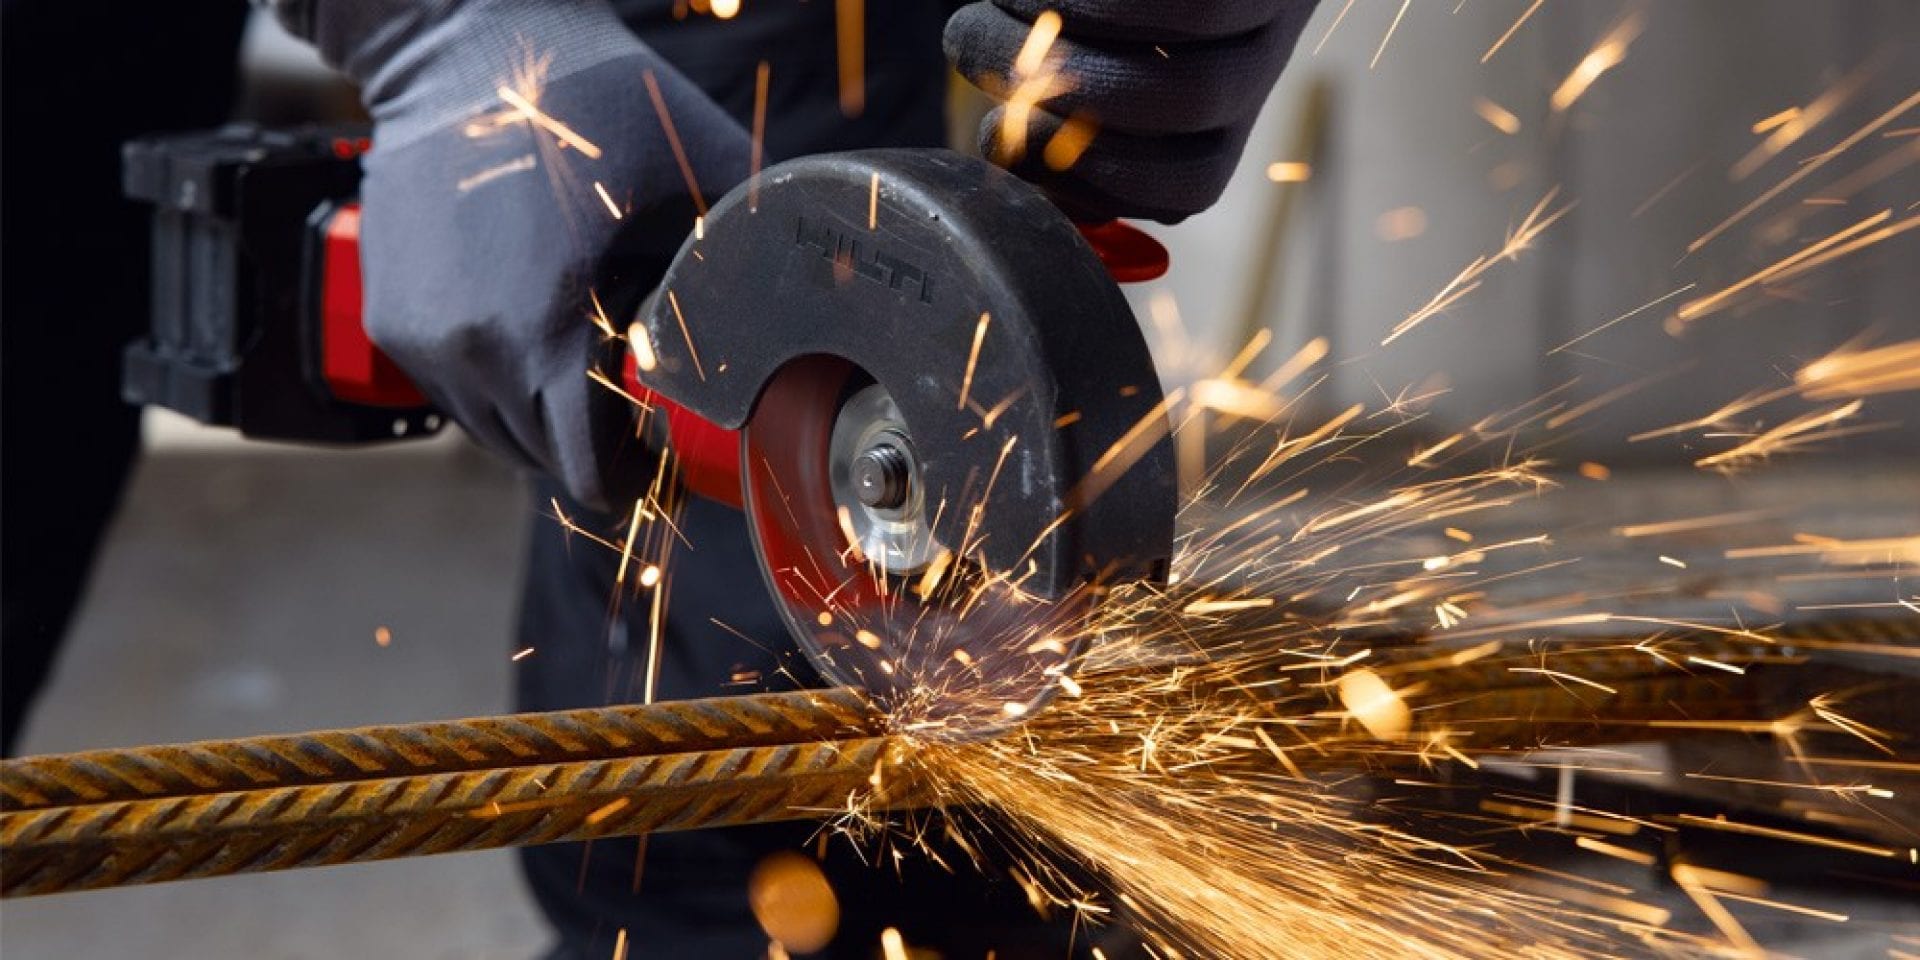 Nuron cordless angle grinder cutting metal